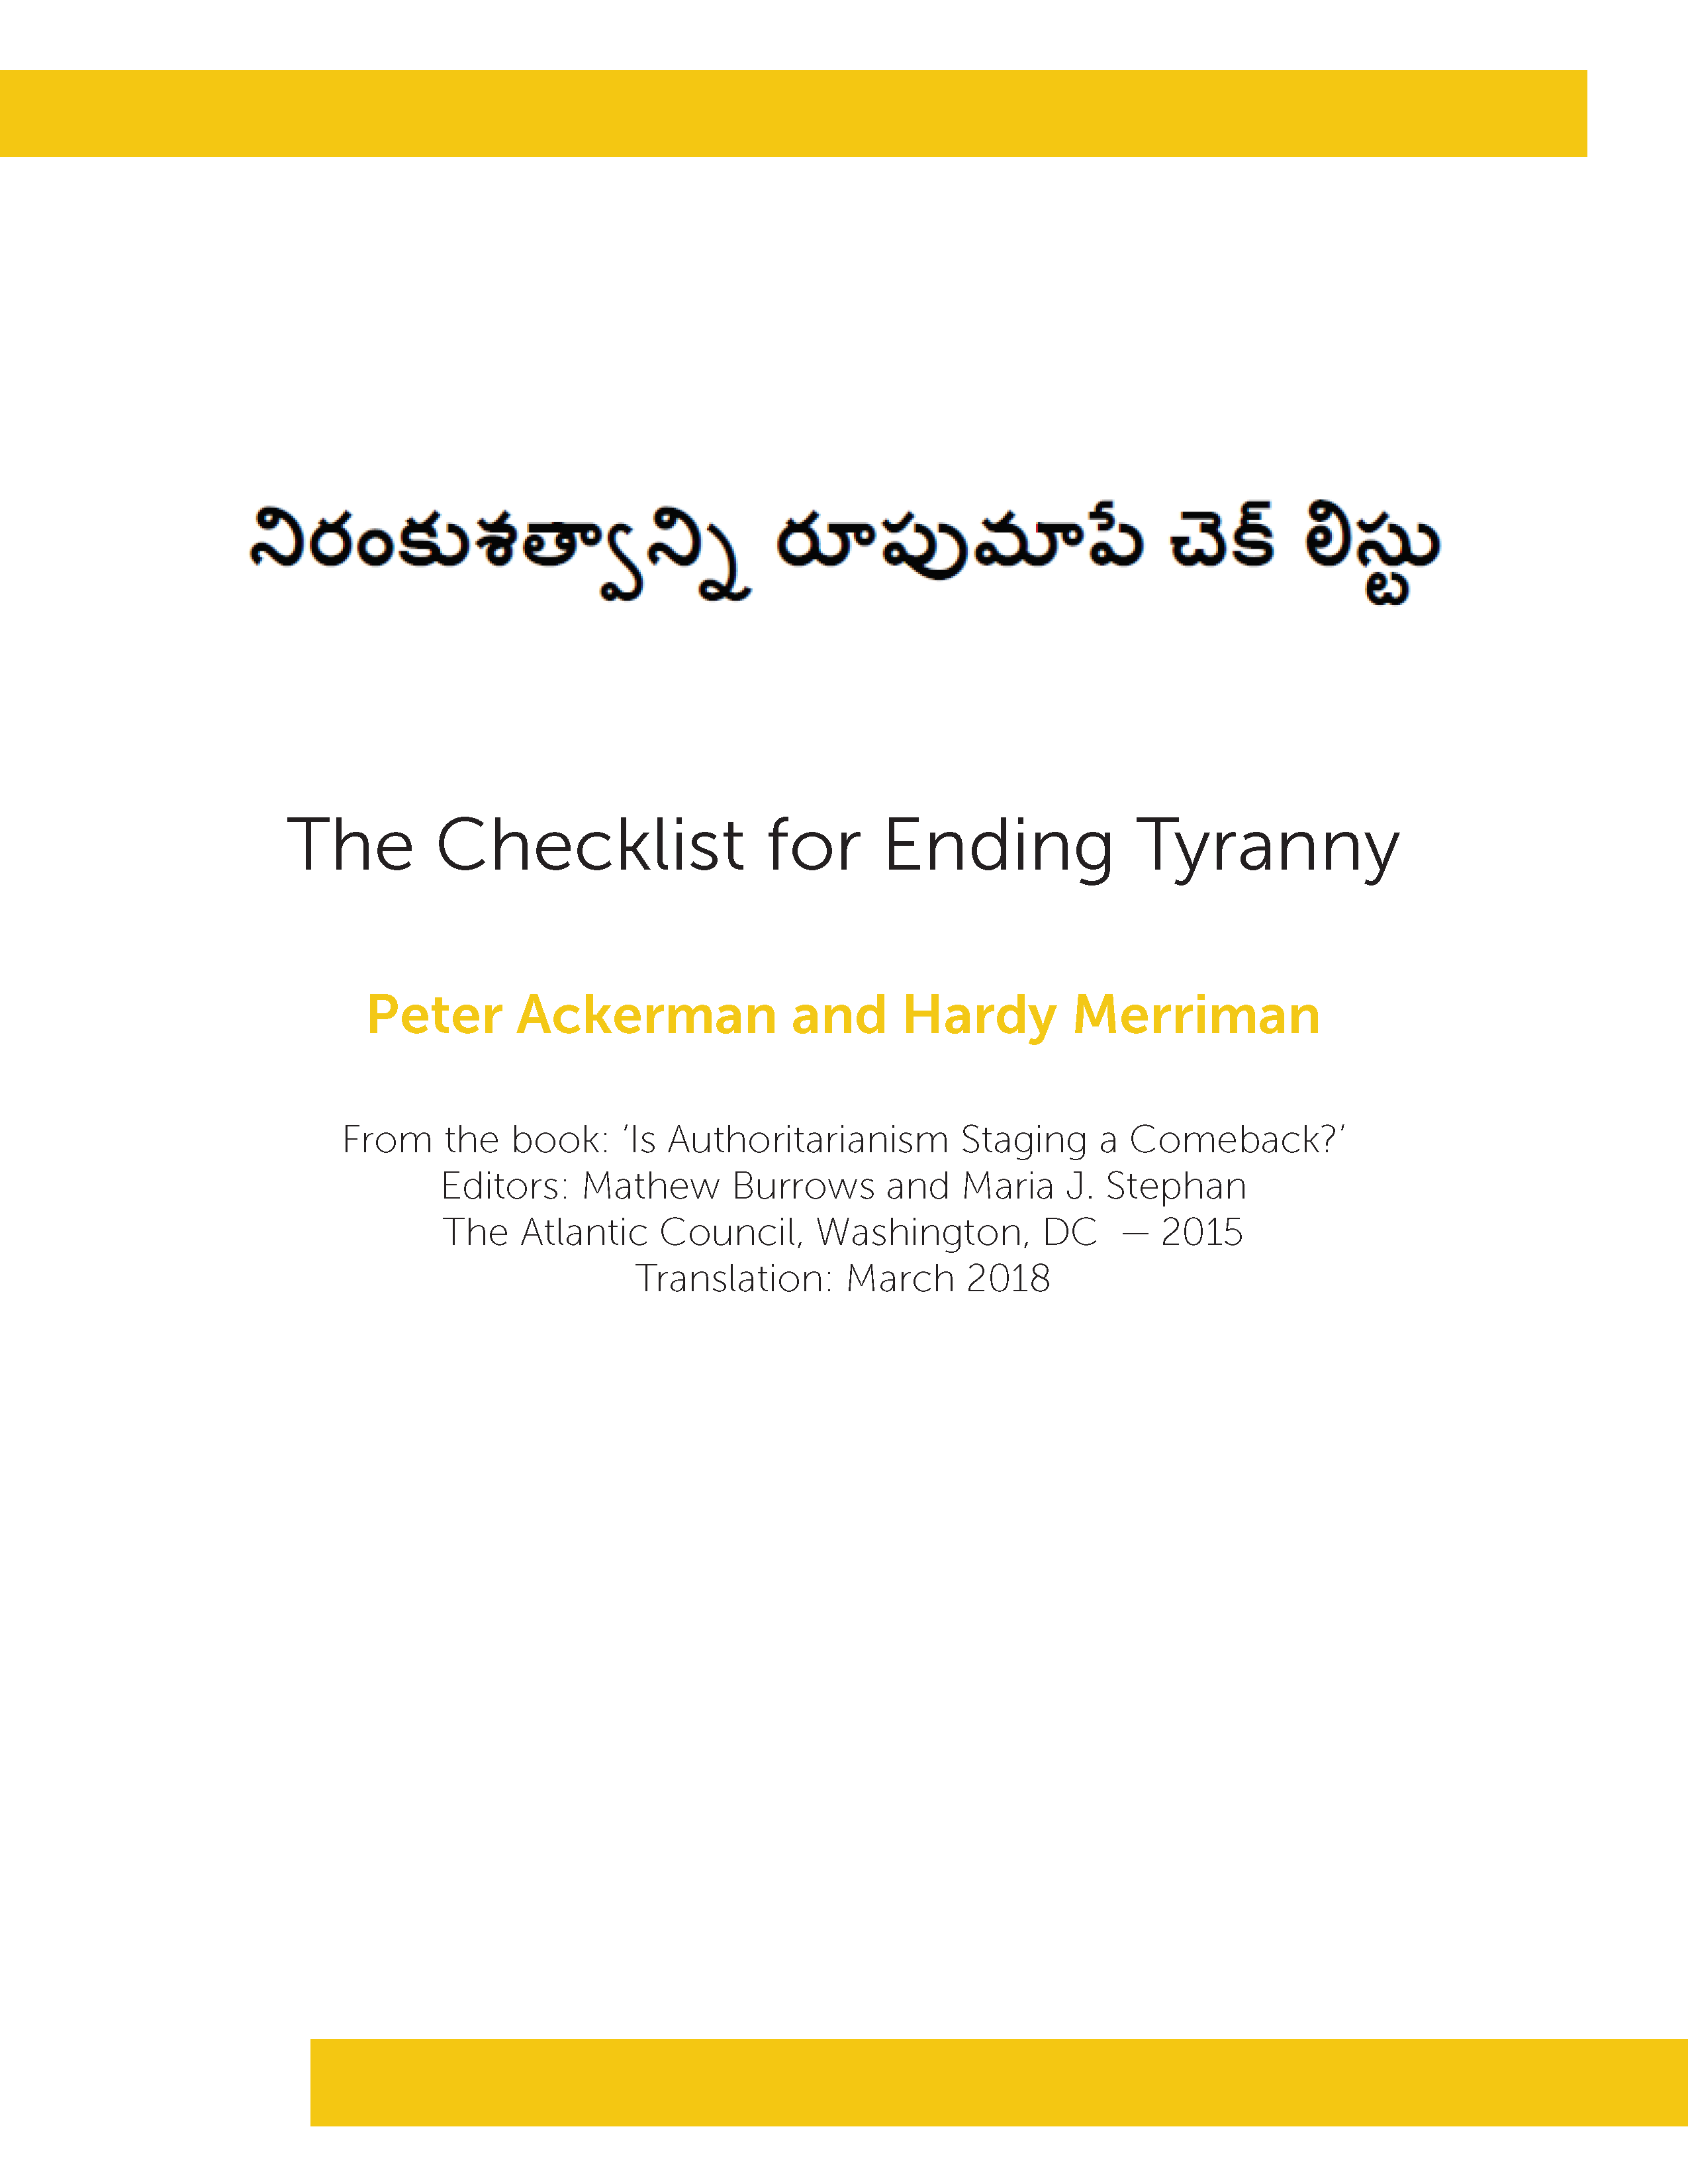 The Checklist for Ending Tyranny (Telugu)